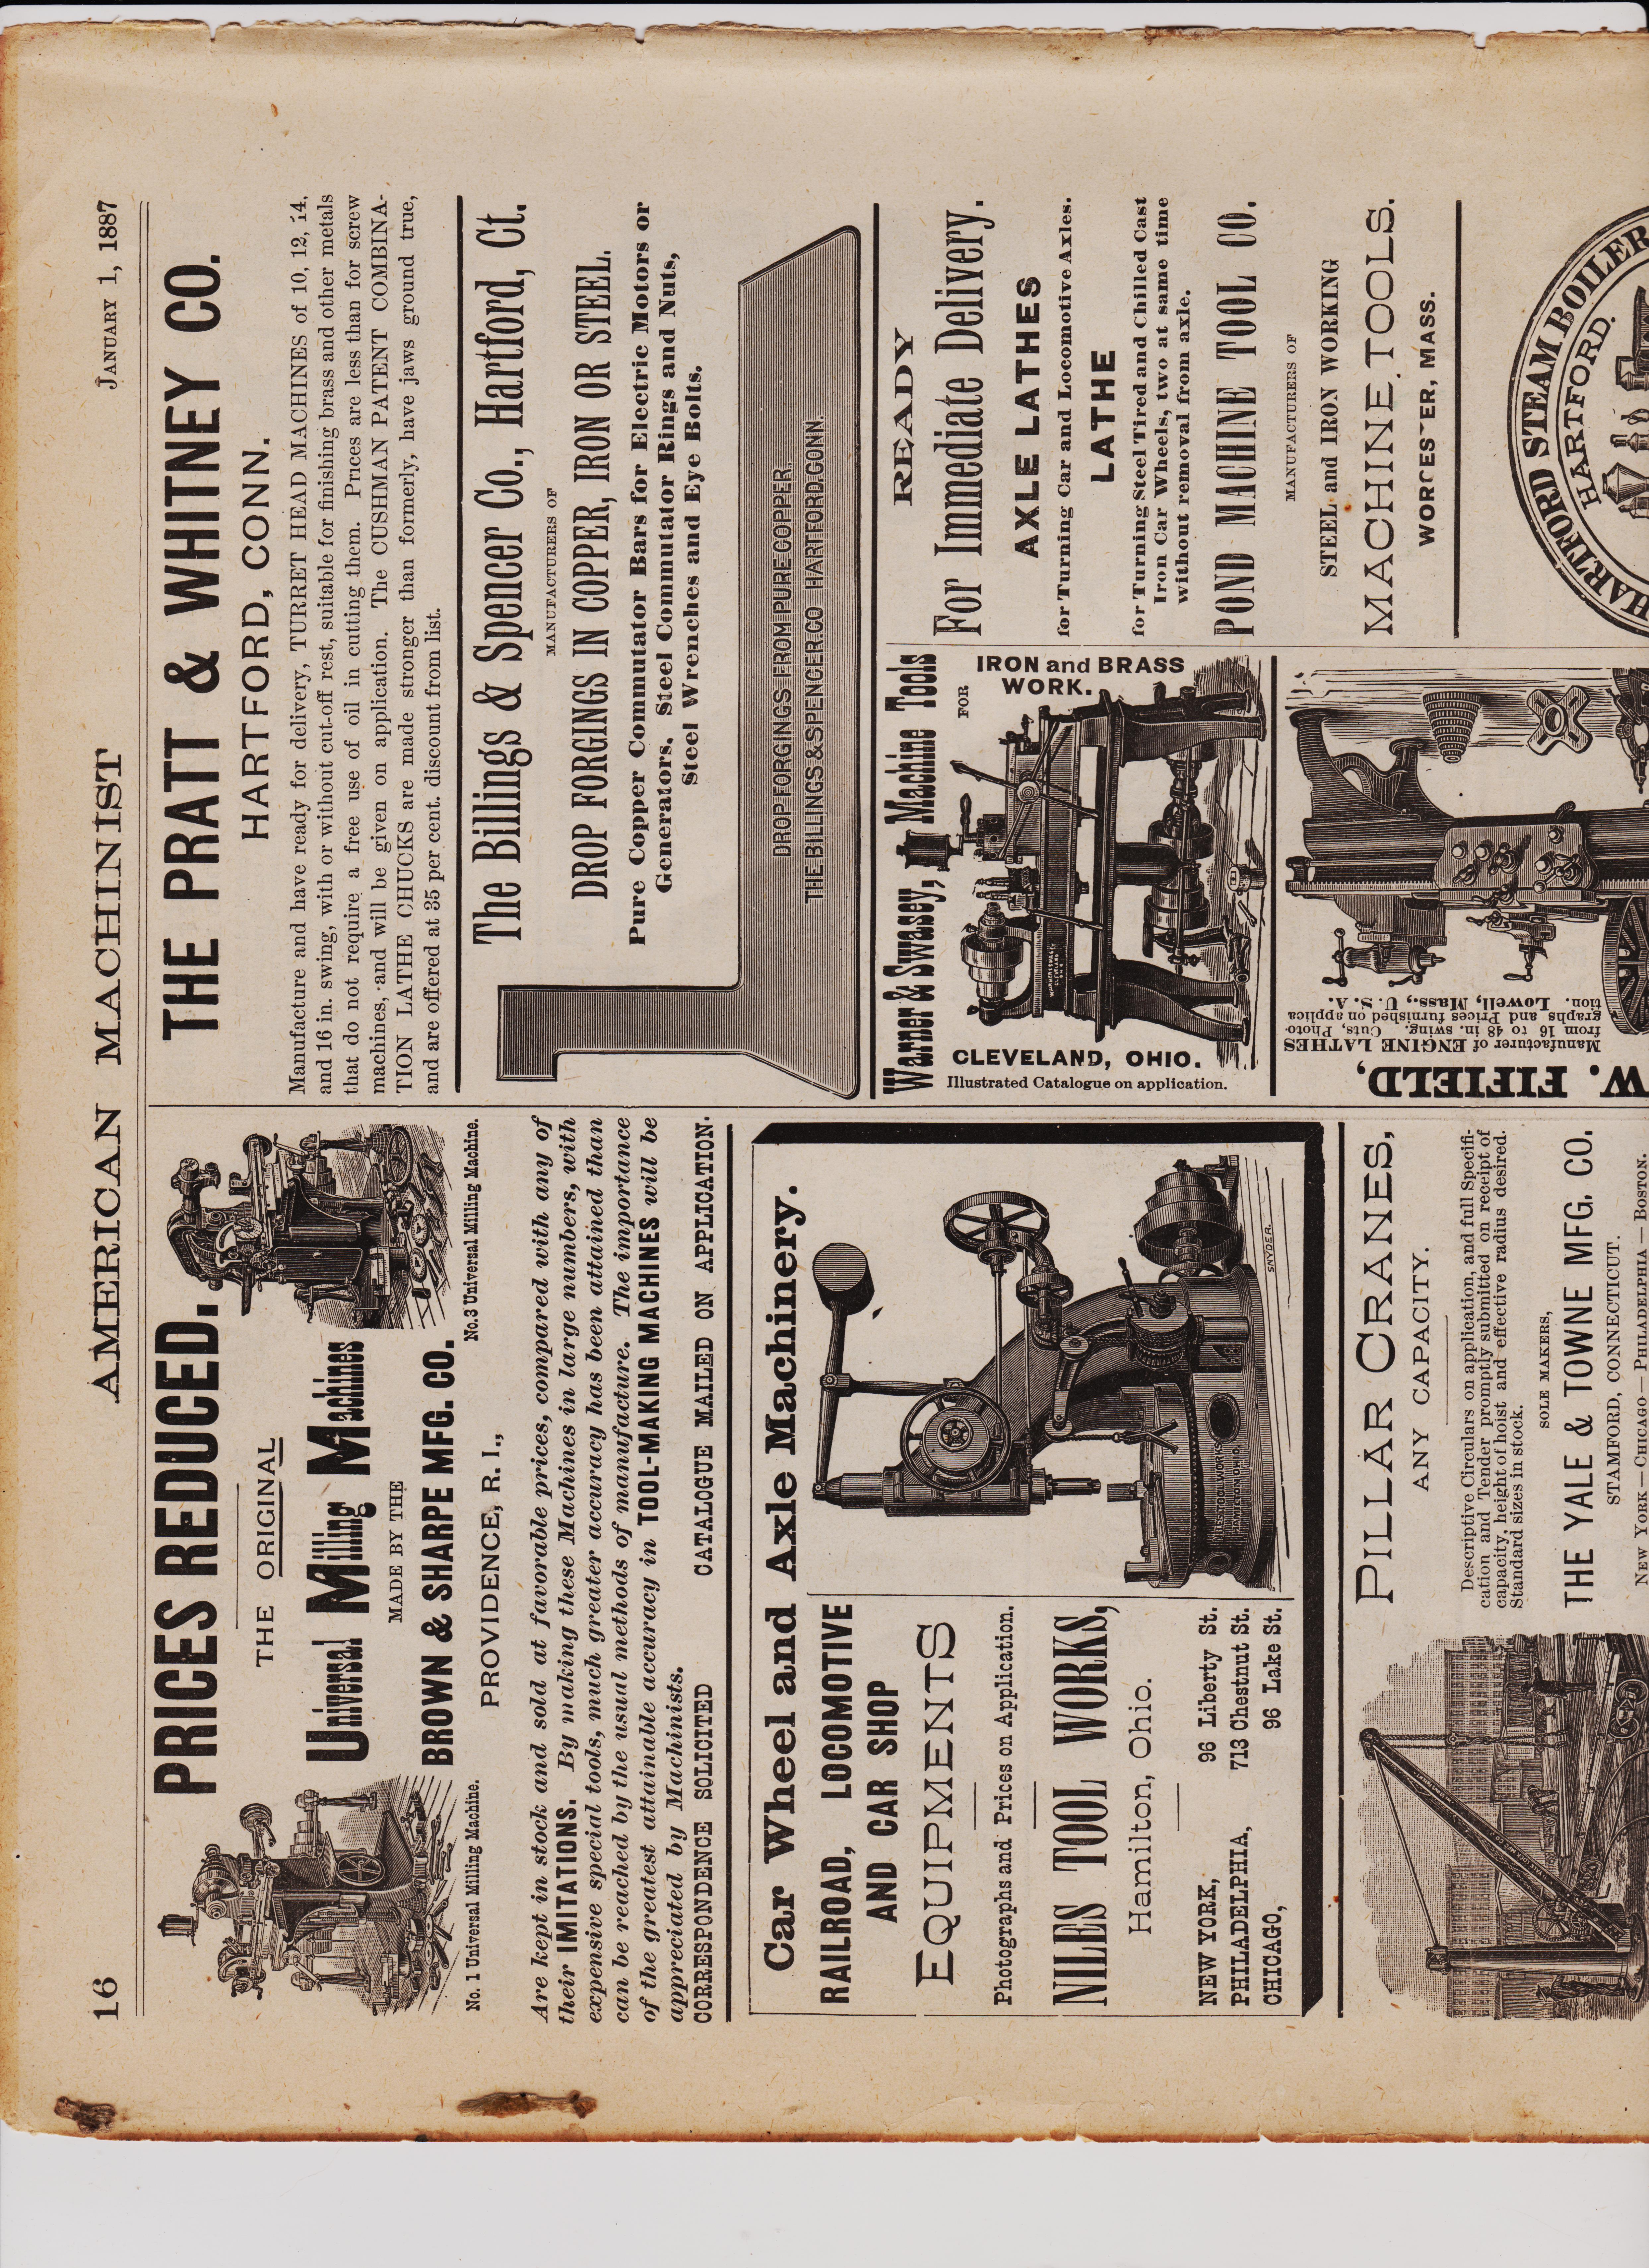 https://antiquemachinery.com/images-American-Machinist-Jan-1-1887/American-Machinist-Jan-1-1887-pg-16-top-Universal-milling-machine-Brown-and-Sharp-mfg-co-Niles-tool-works-verticle-Slotter-CarWheel-axle-railroad-locomotive-shop-Pillar-Cranes-Warner-and-Swasey-machine-pratt.jpeg